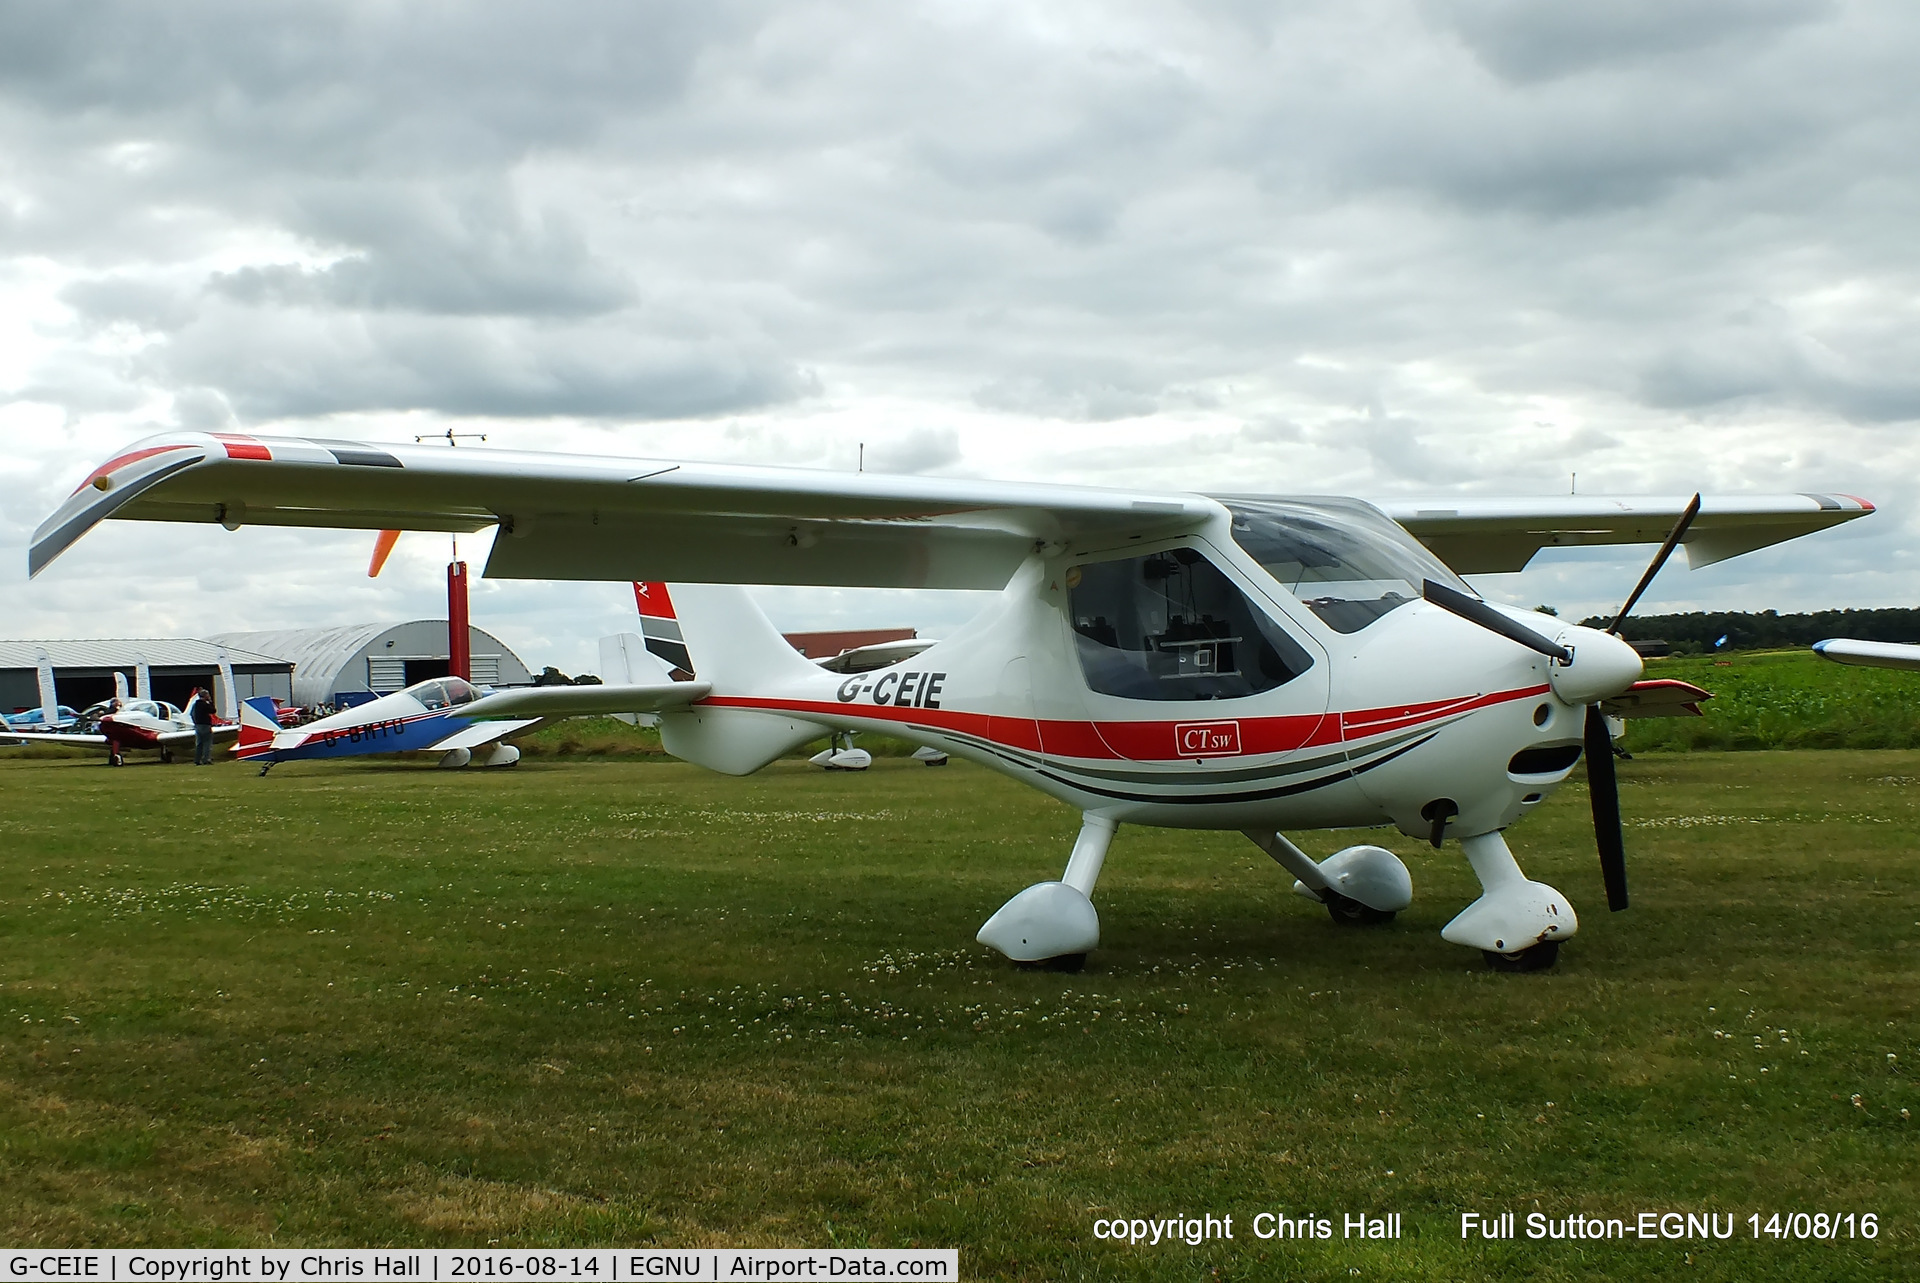 G-CEIE, 2006 Flight Design CTSW C/N 8243, at the LAA Vale of York Strut fly-in, Full Sutton